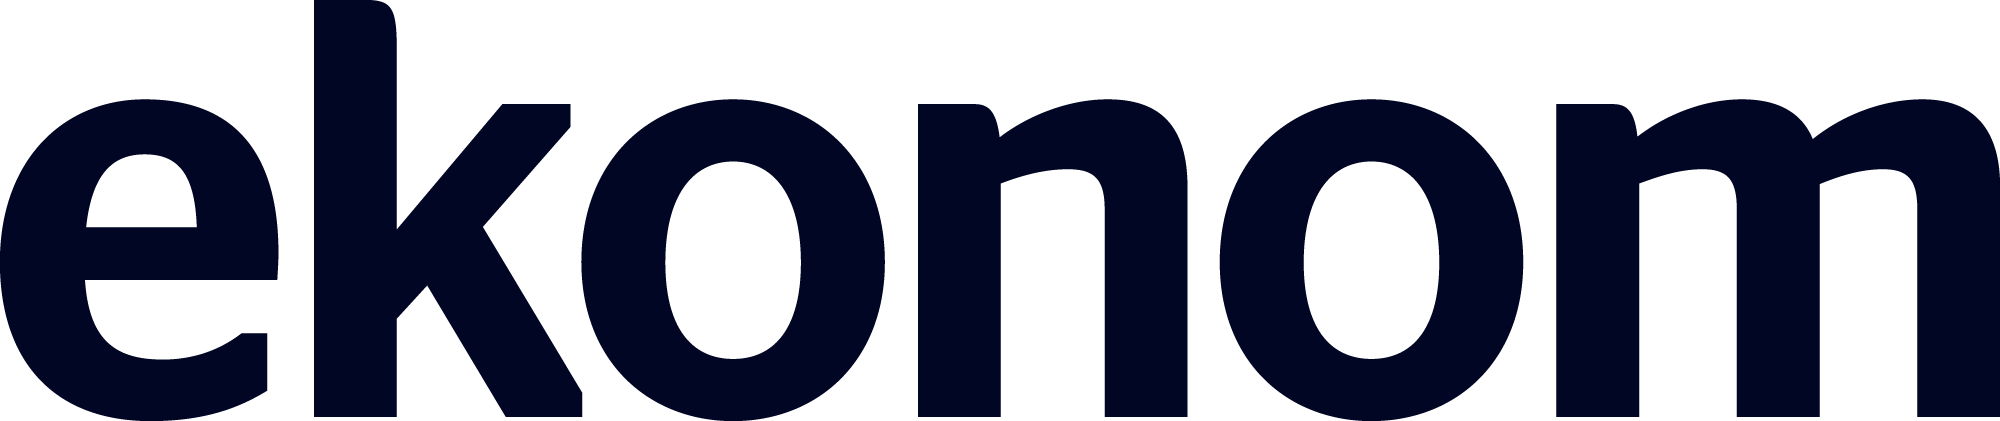 Ekonom logo